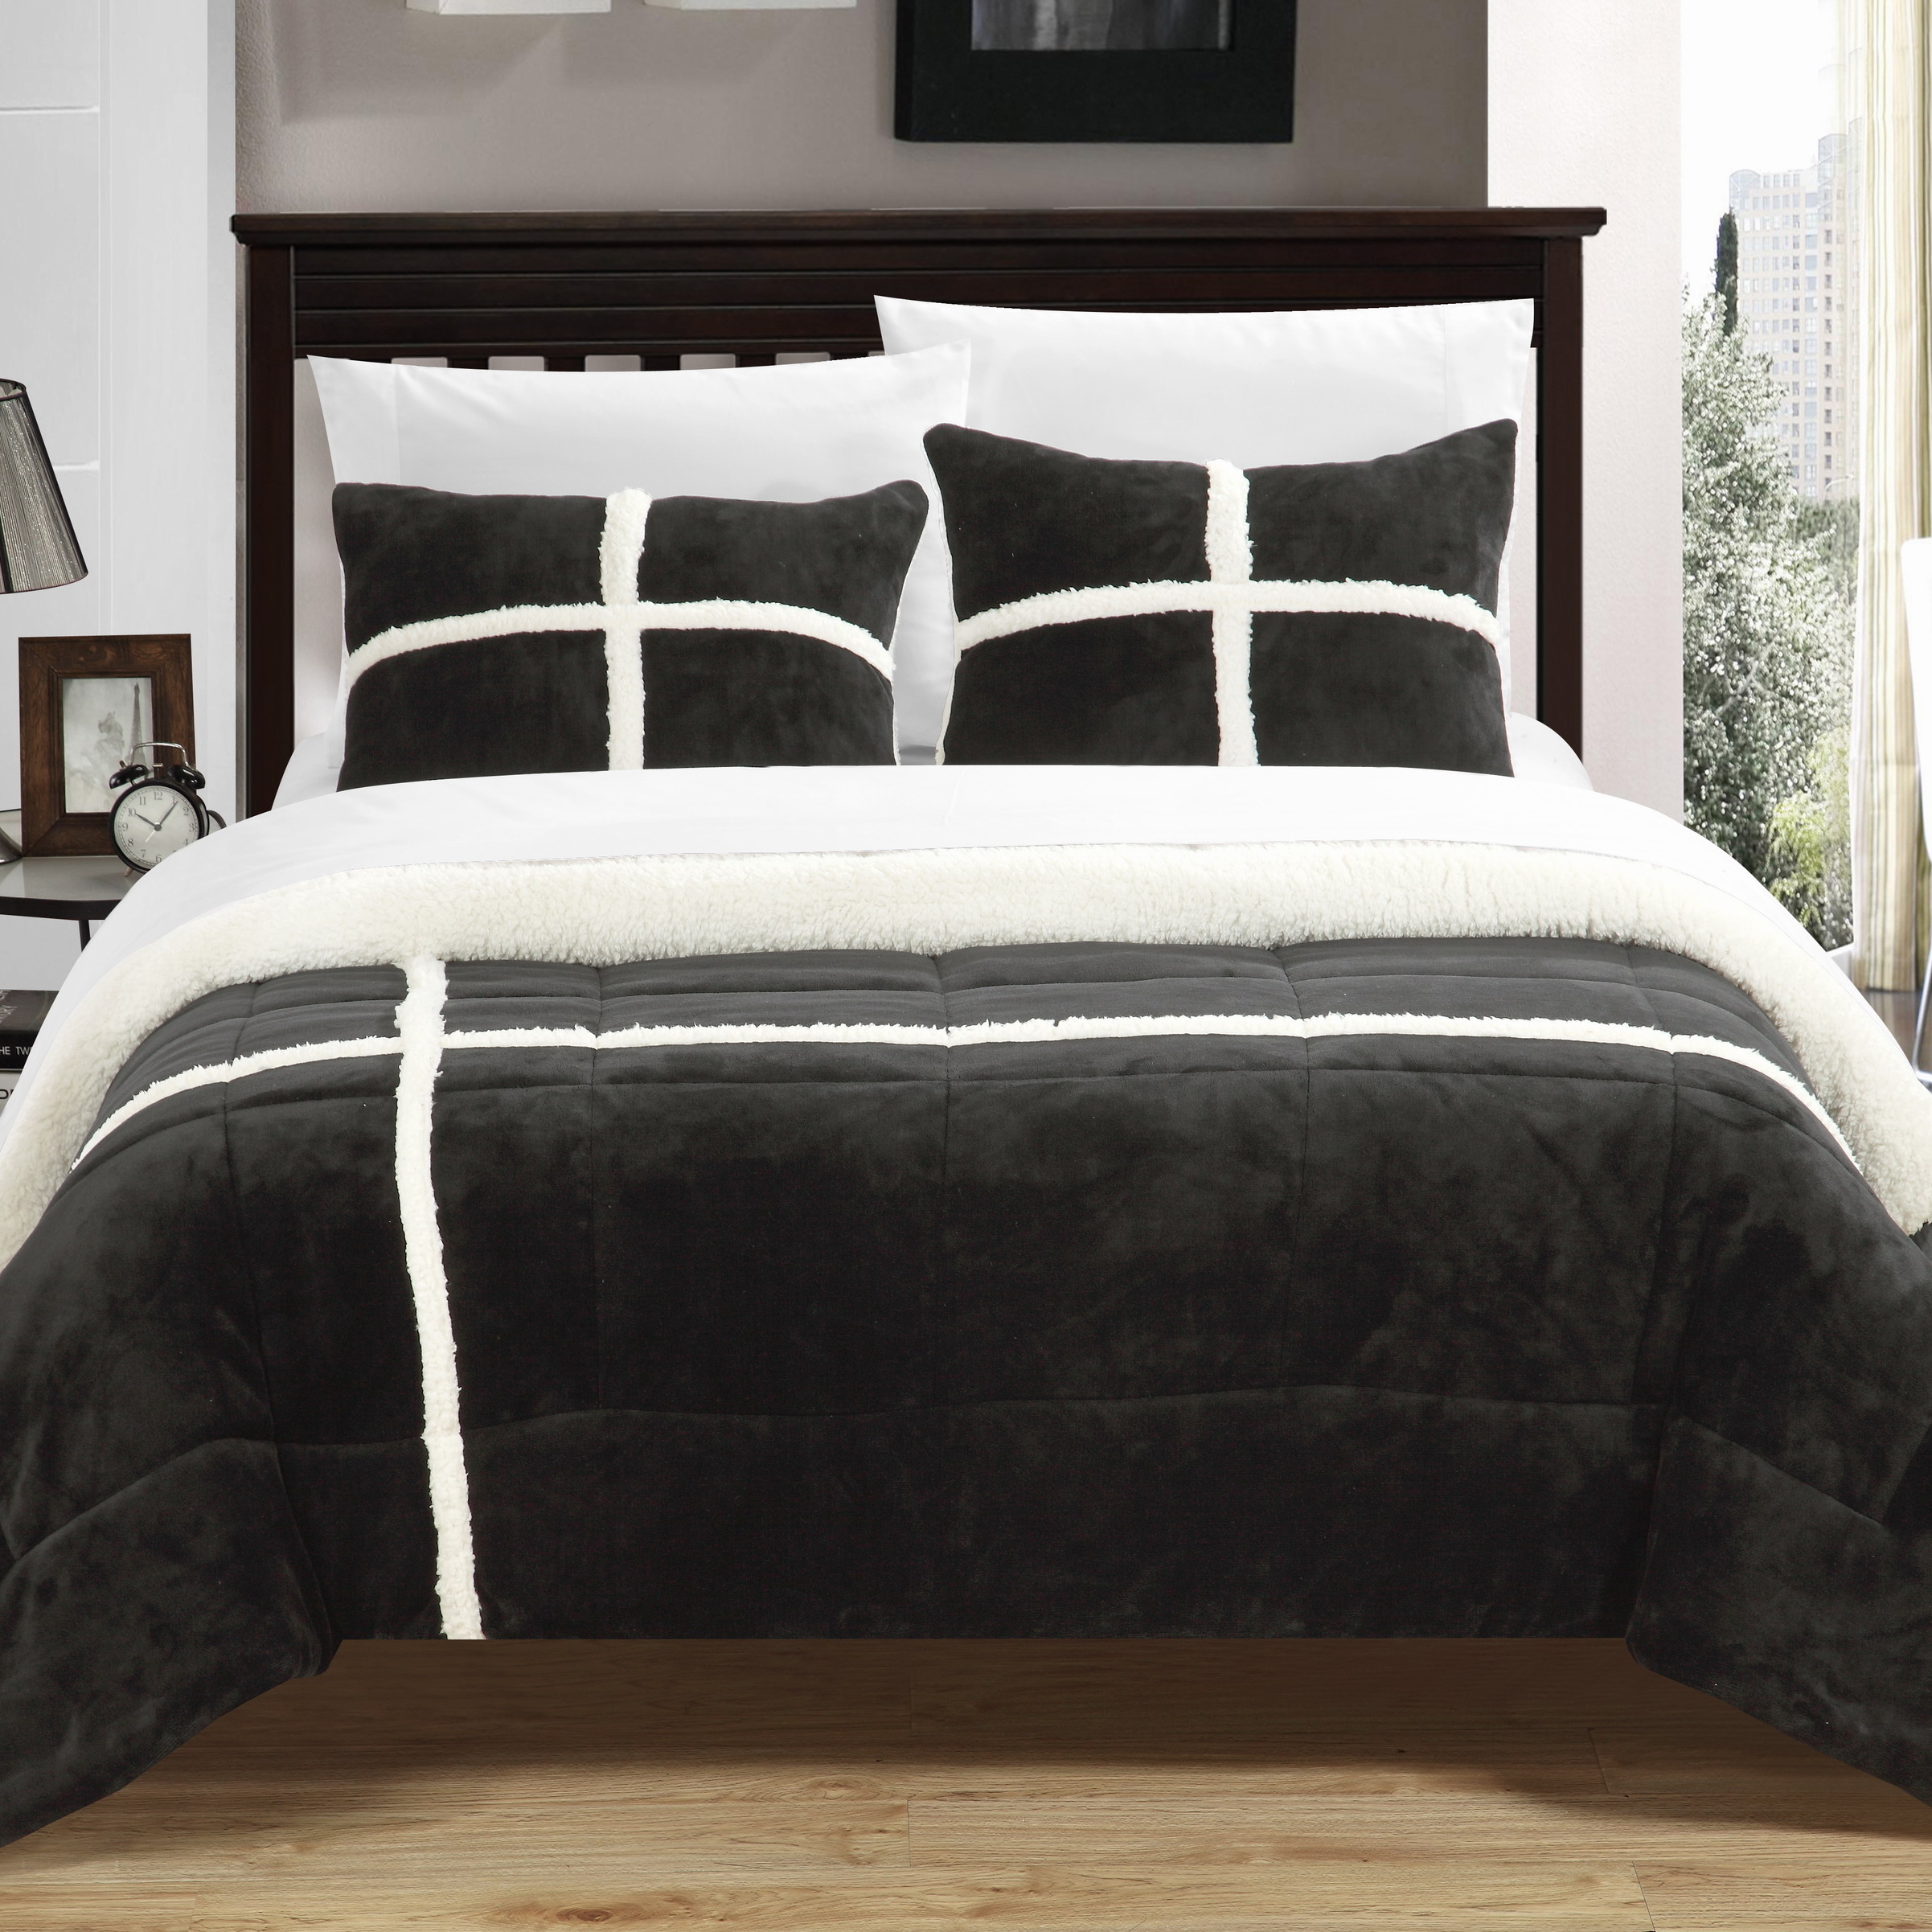 Chloe 3 Or 2 Piece Comforter Set Ultra Plush Micro Mink Sherpa Lined Bedding â Decorative Pillow Shams Included - Black, King - 3 Piece